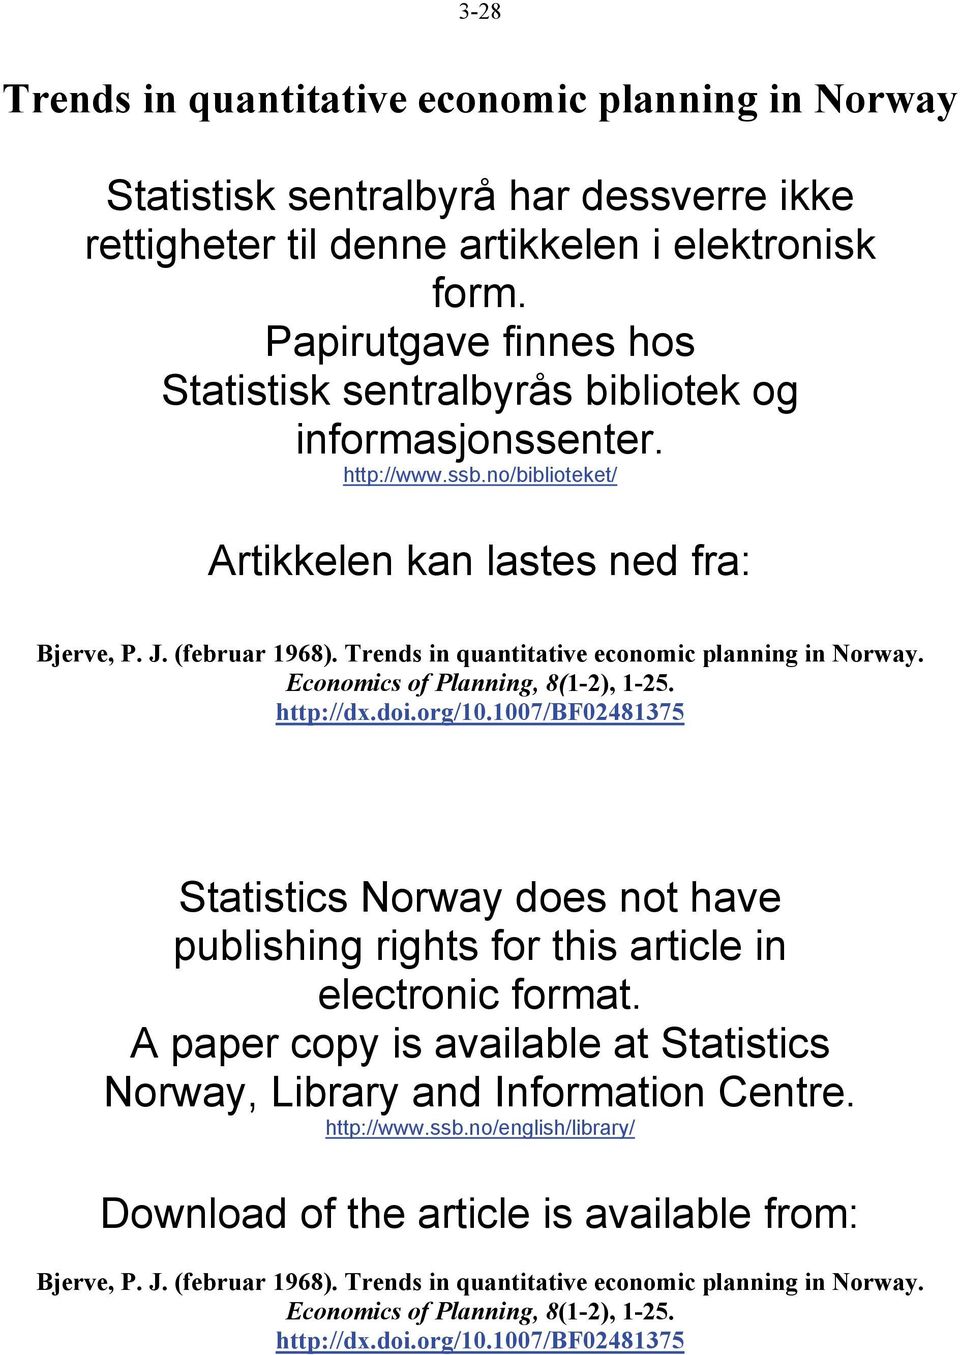 Trends in quantitative economic planning in Norway. Economics of Planning, 8(1-2), 1-25. http://dx.doi.org/10.